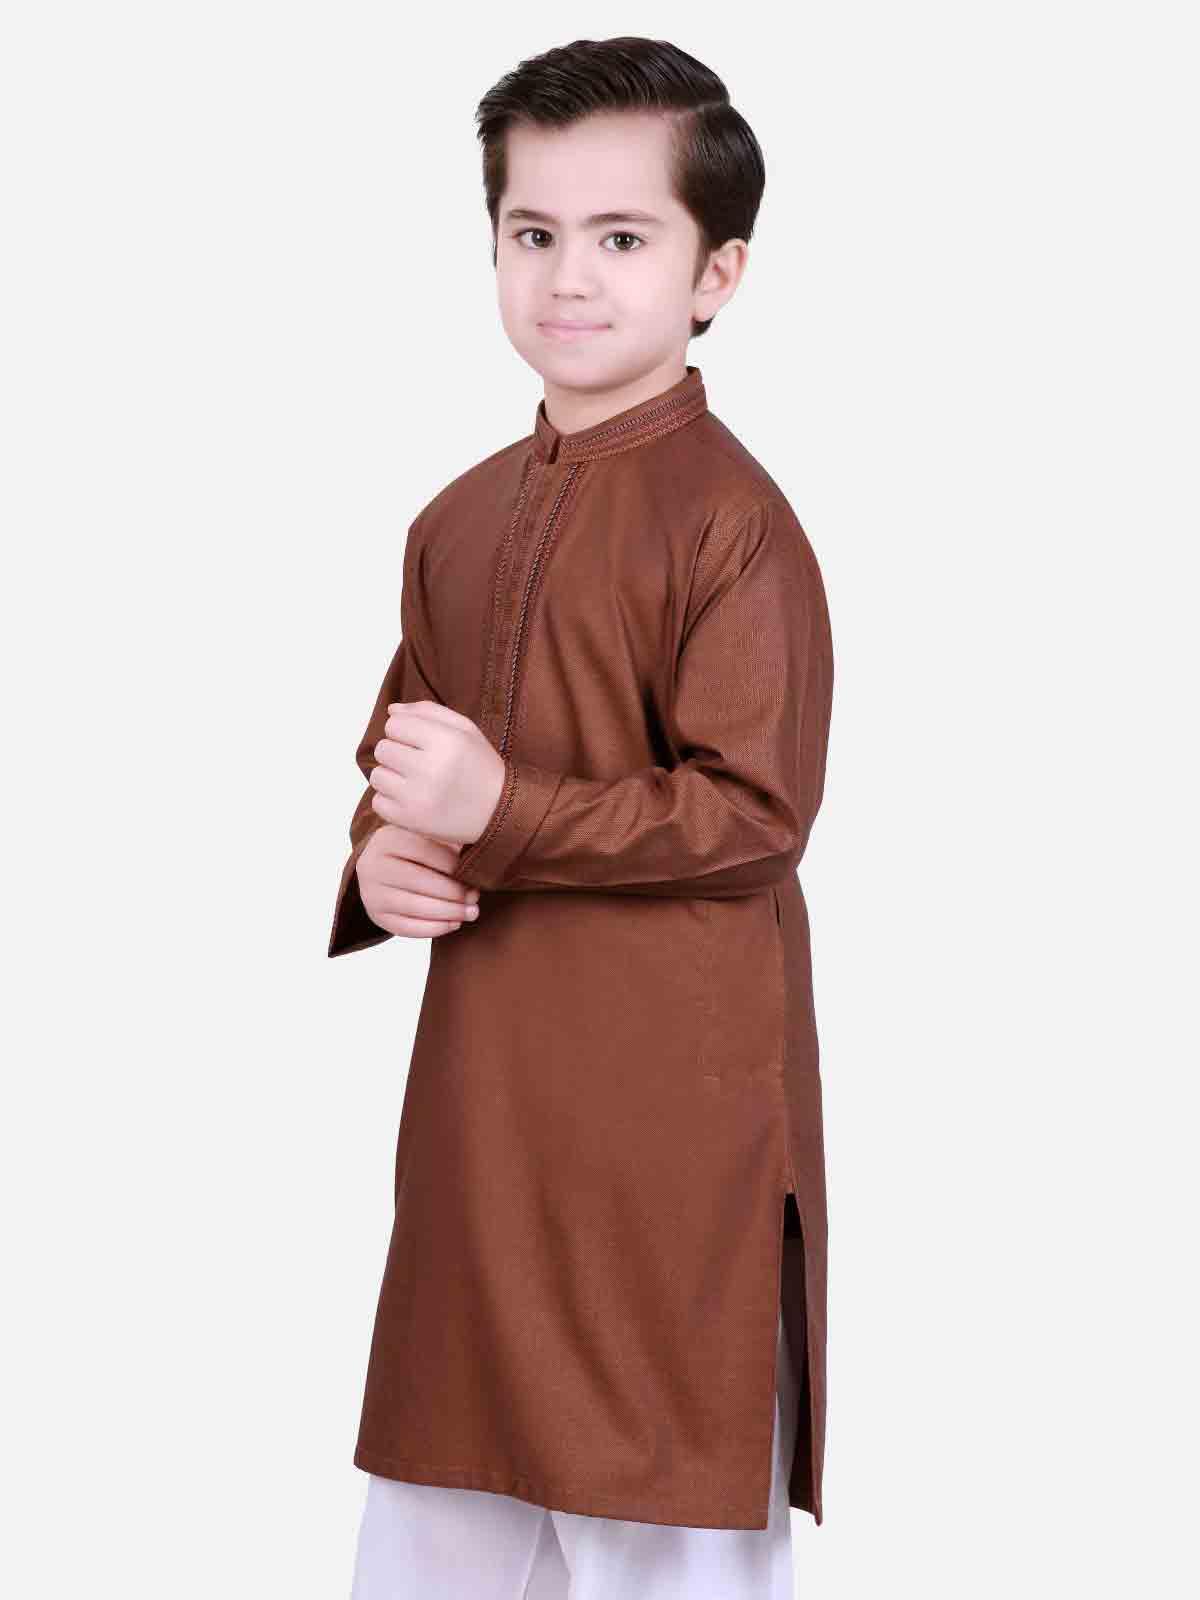 Latest Eid Dress For Baby Boy